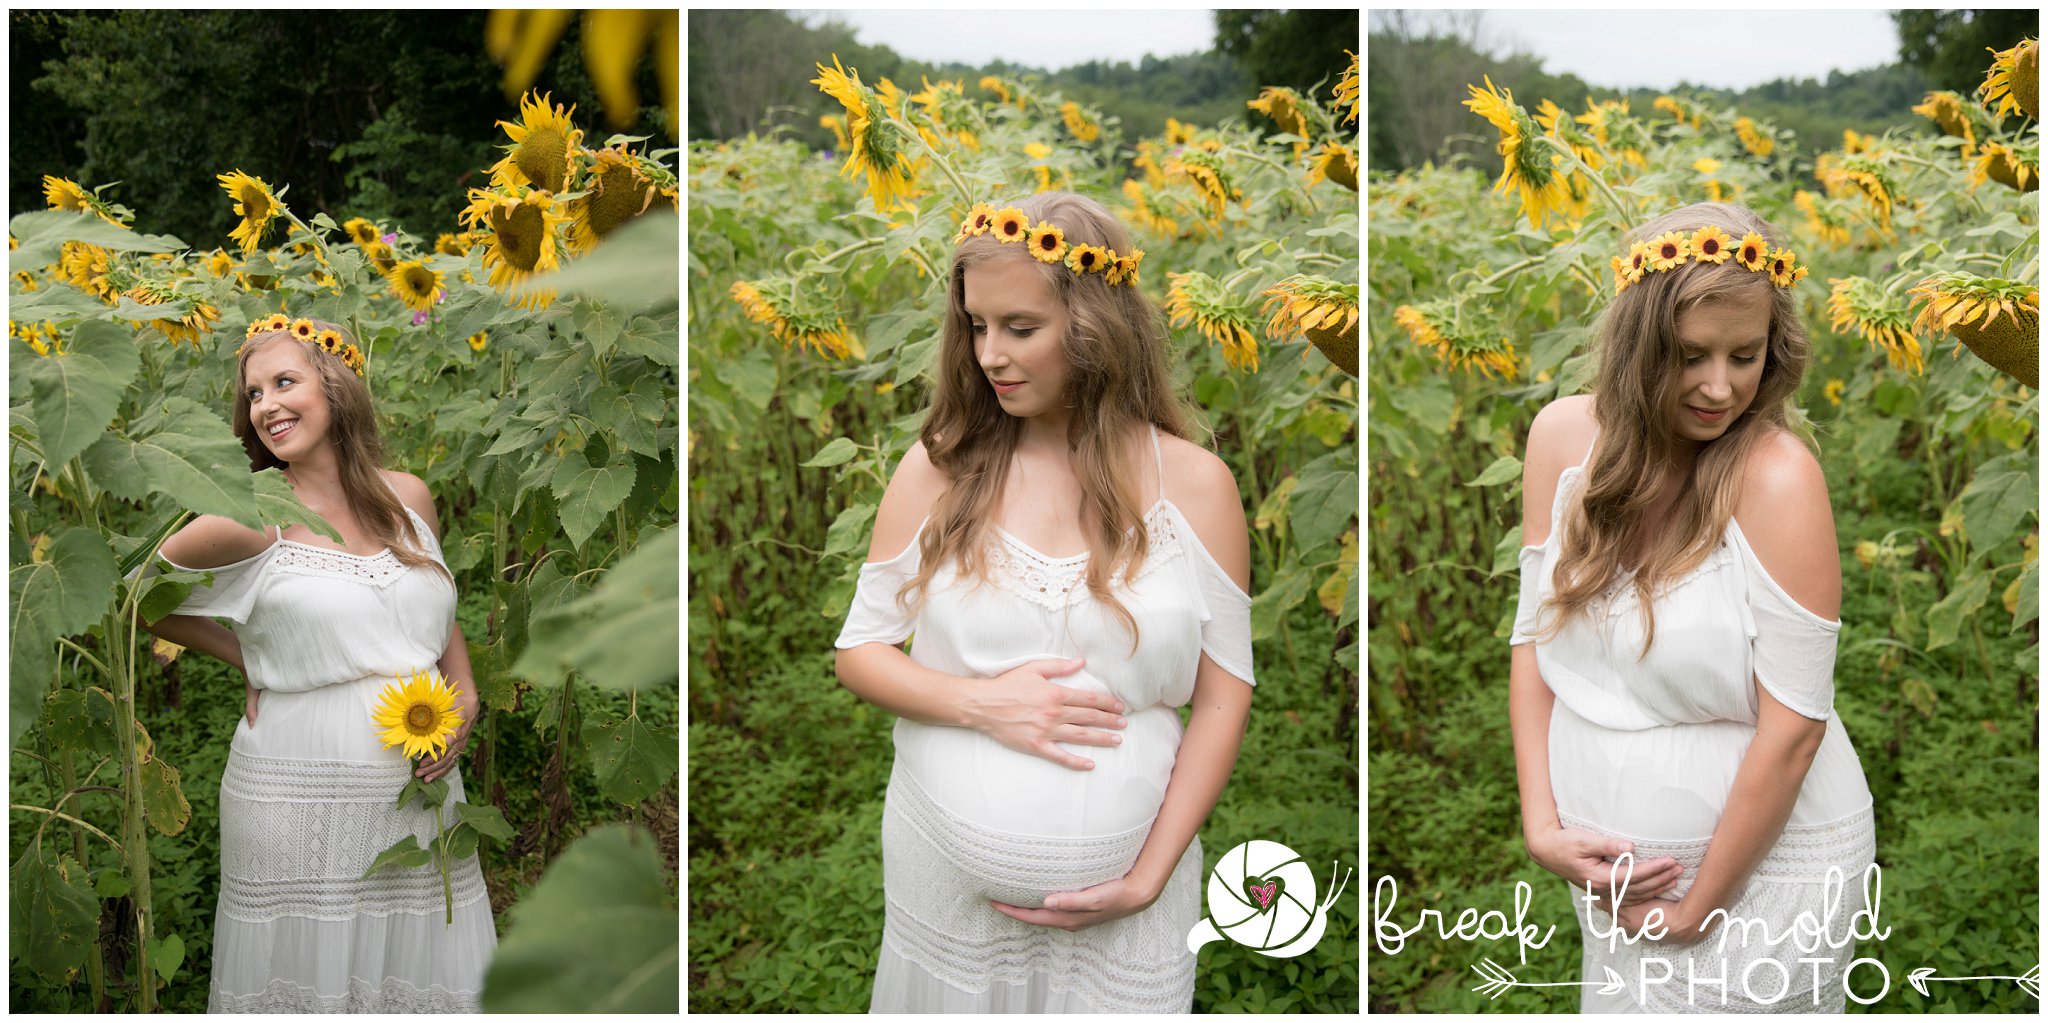 break-the-mold-photo-maternity-shoot-sunflowers_1234.jpg